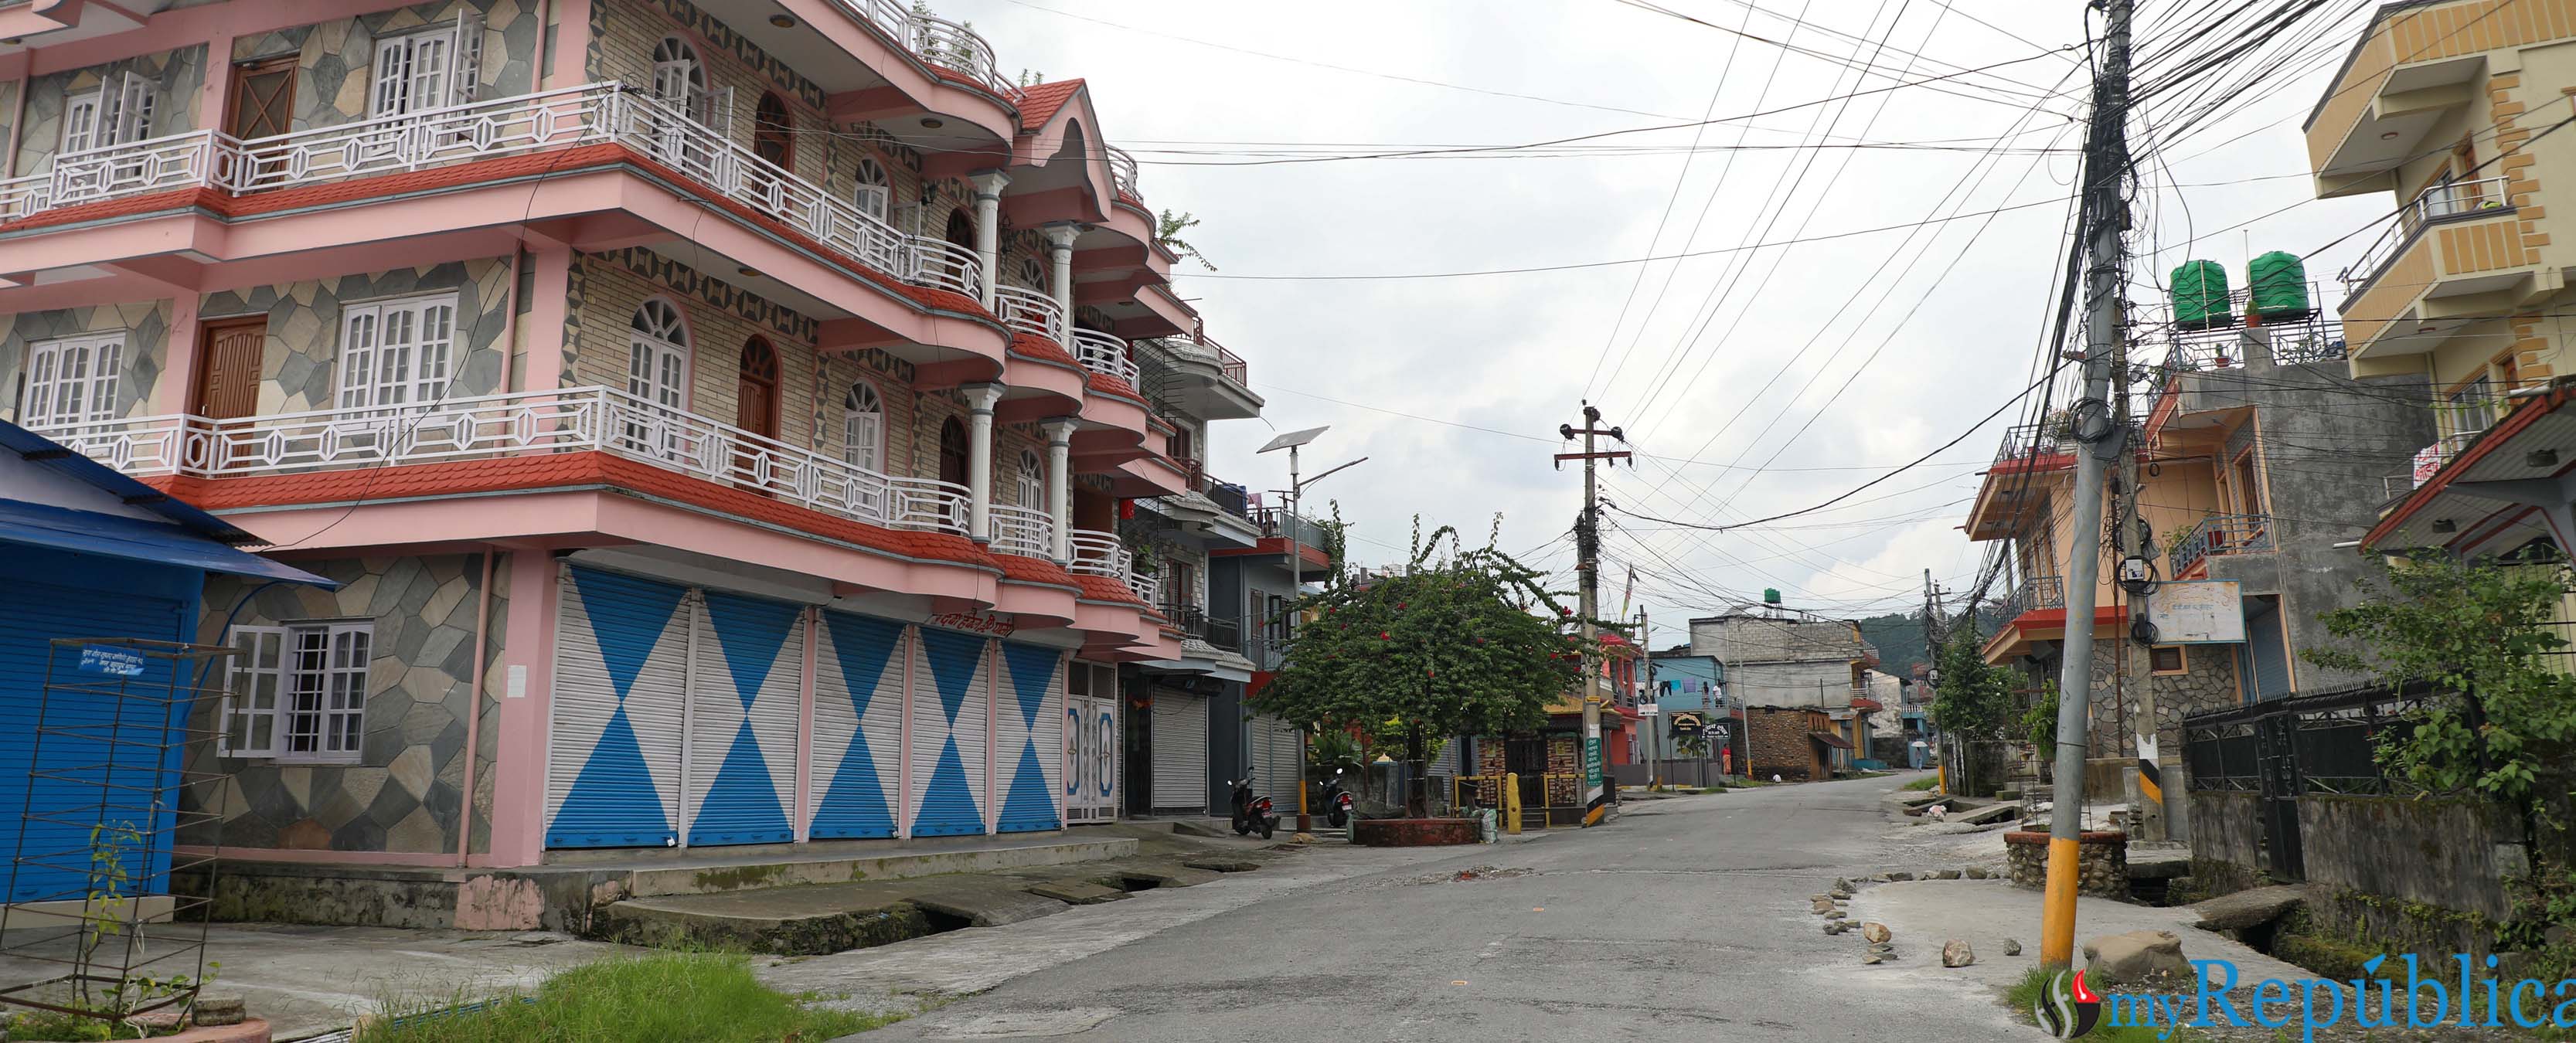 IN PICS: Three wards of Pokhara Metropolis sealed off